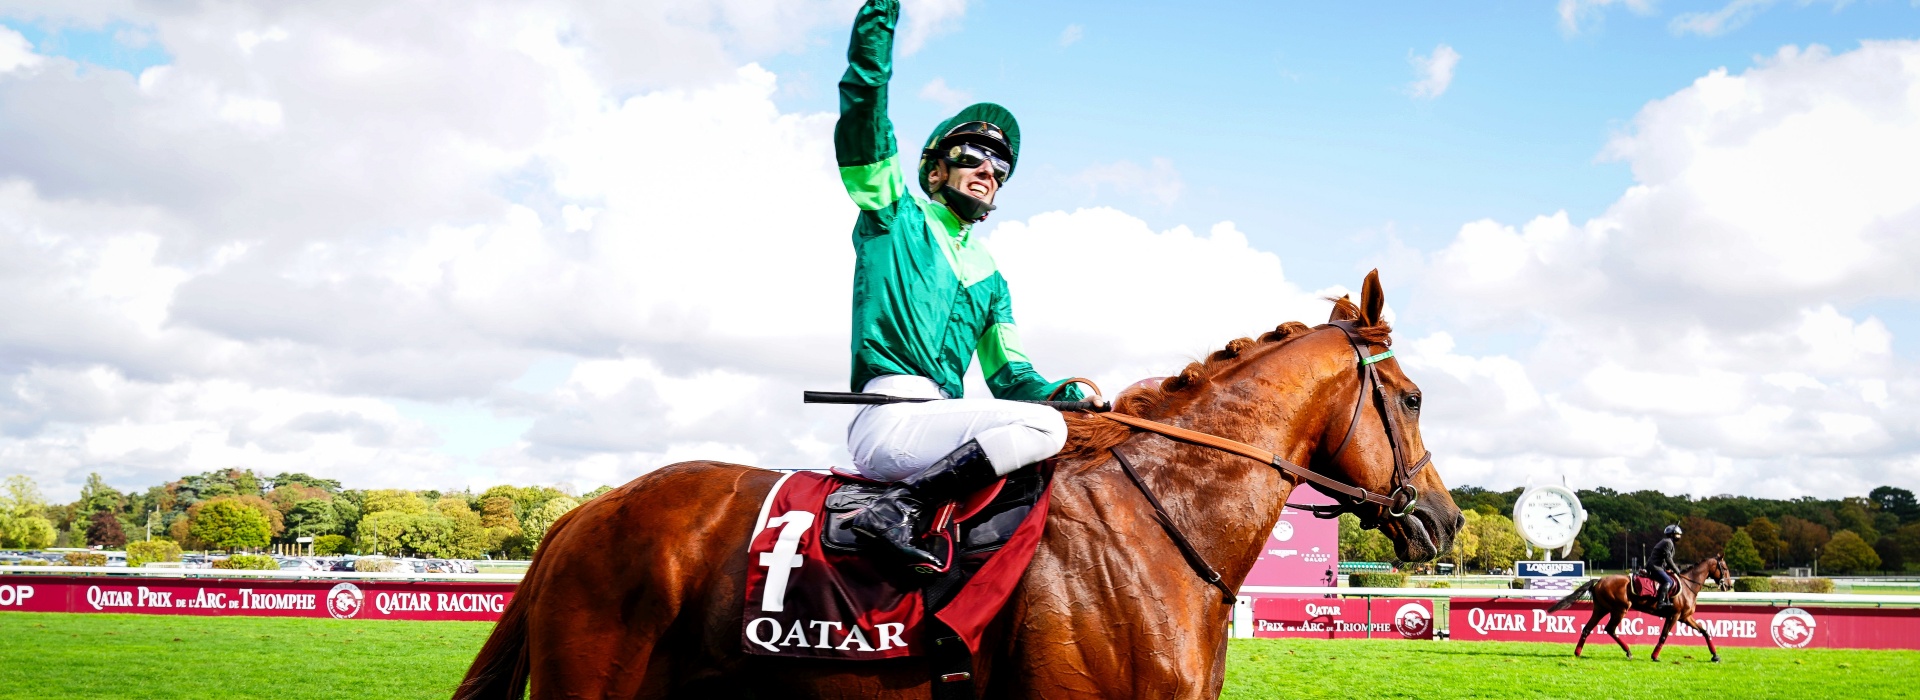 The Qatar Prix de L'Arc de Triomphe - Paris' Celebration of Equines and Elegance